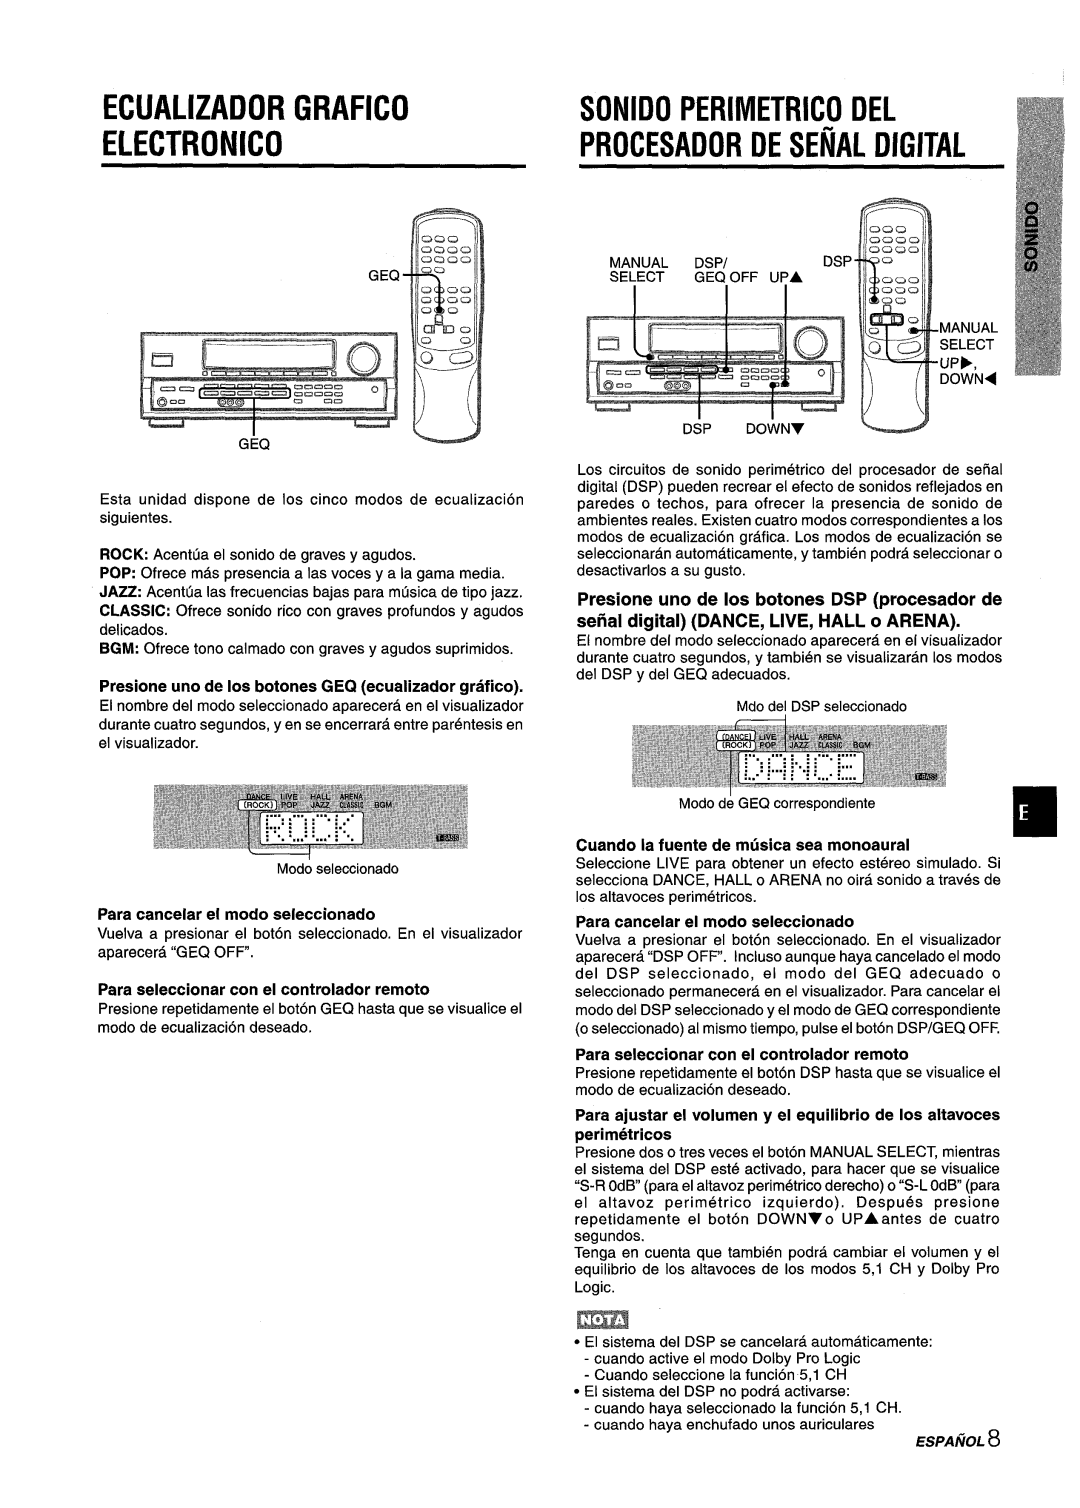 Aiwa AV-D25 manual Ecualizador Grafico Electronic, Sonido Perimetrico Del Procesador De Senal Digital 